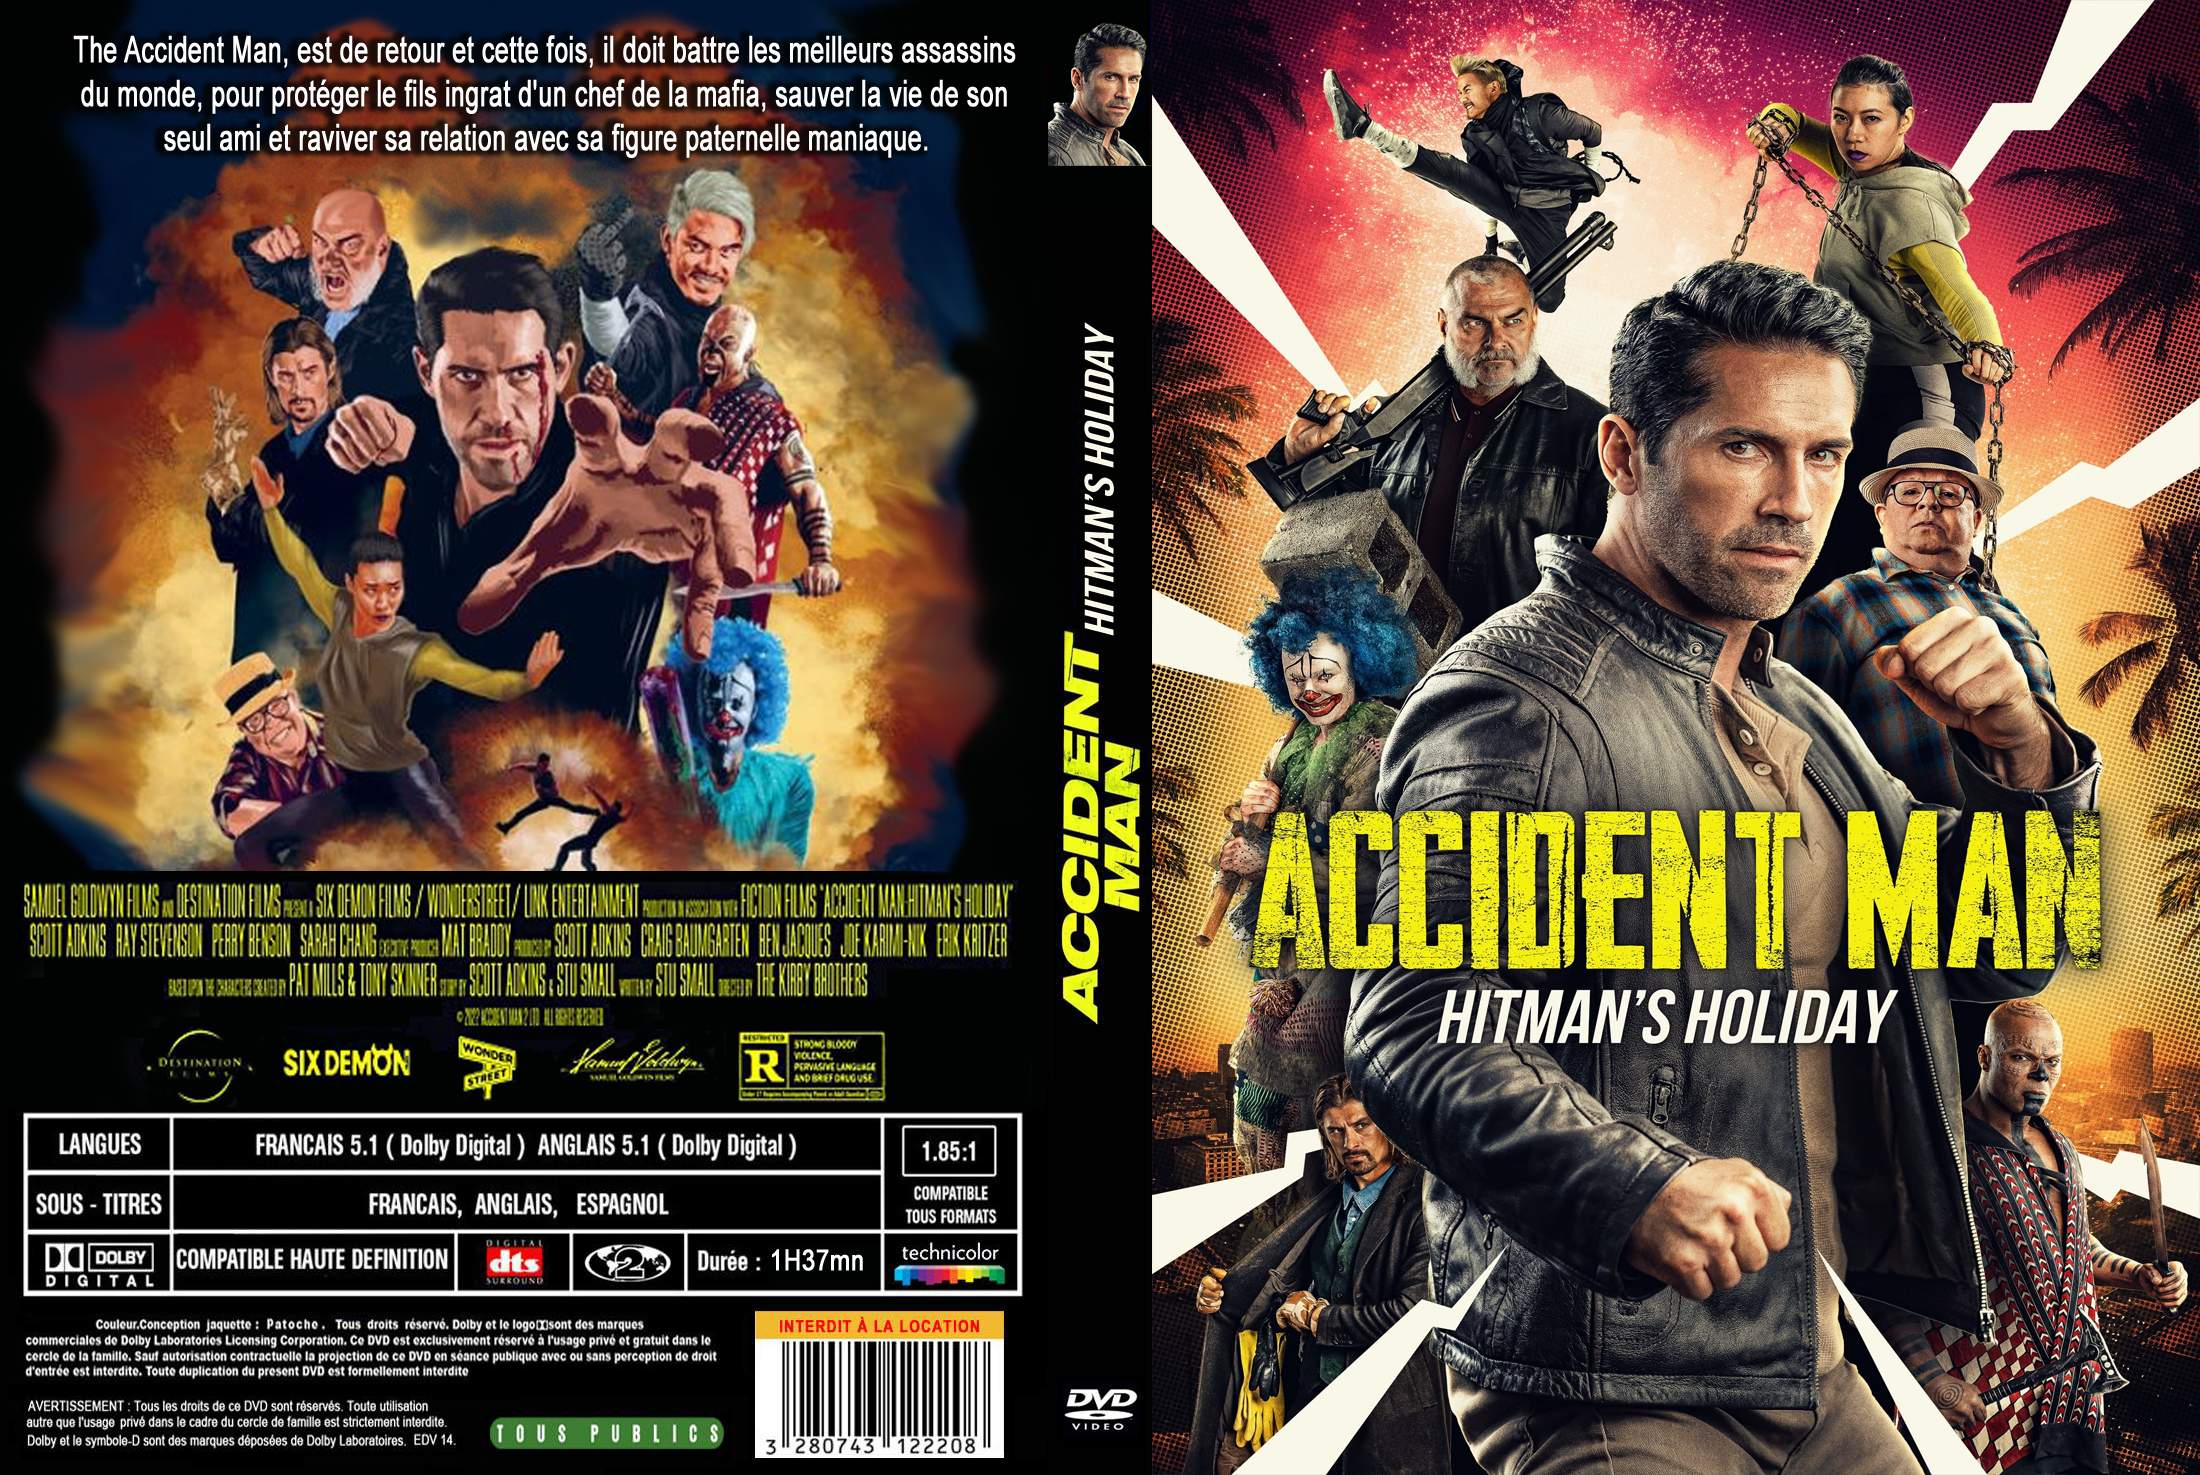 Jaquette DVD Accident man 2 custom